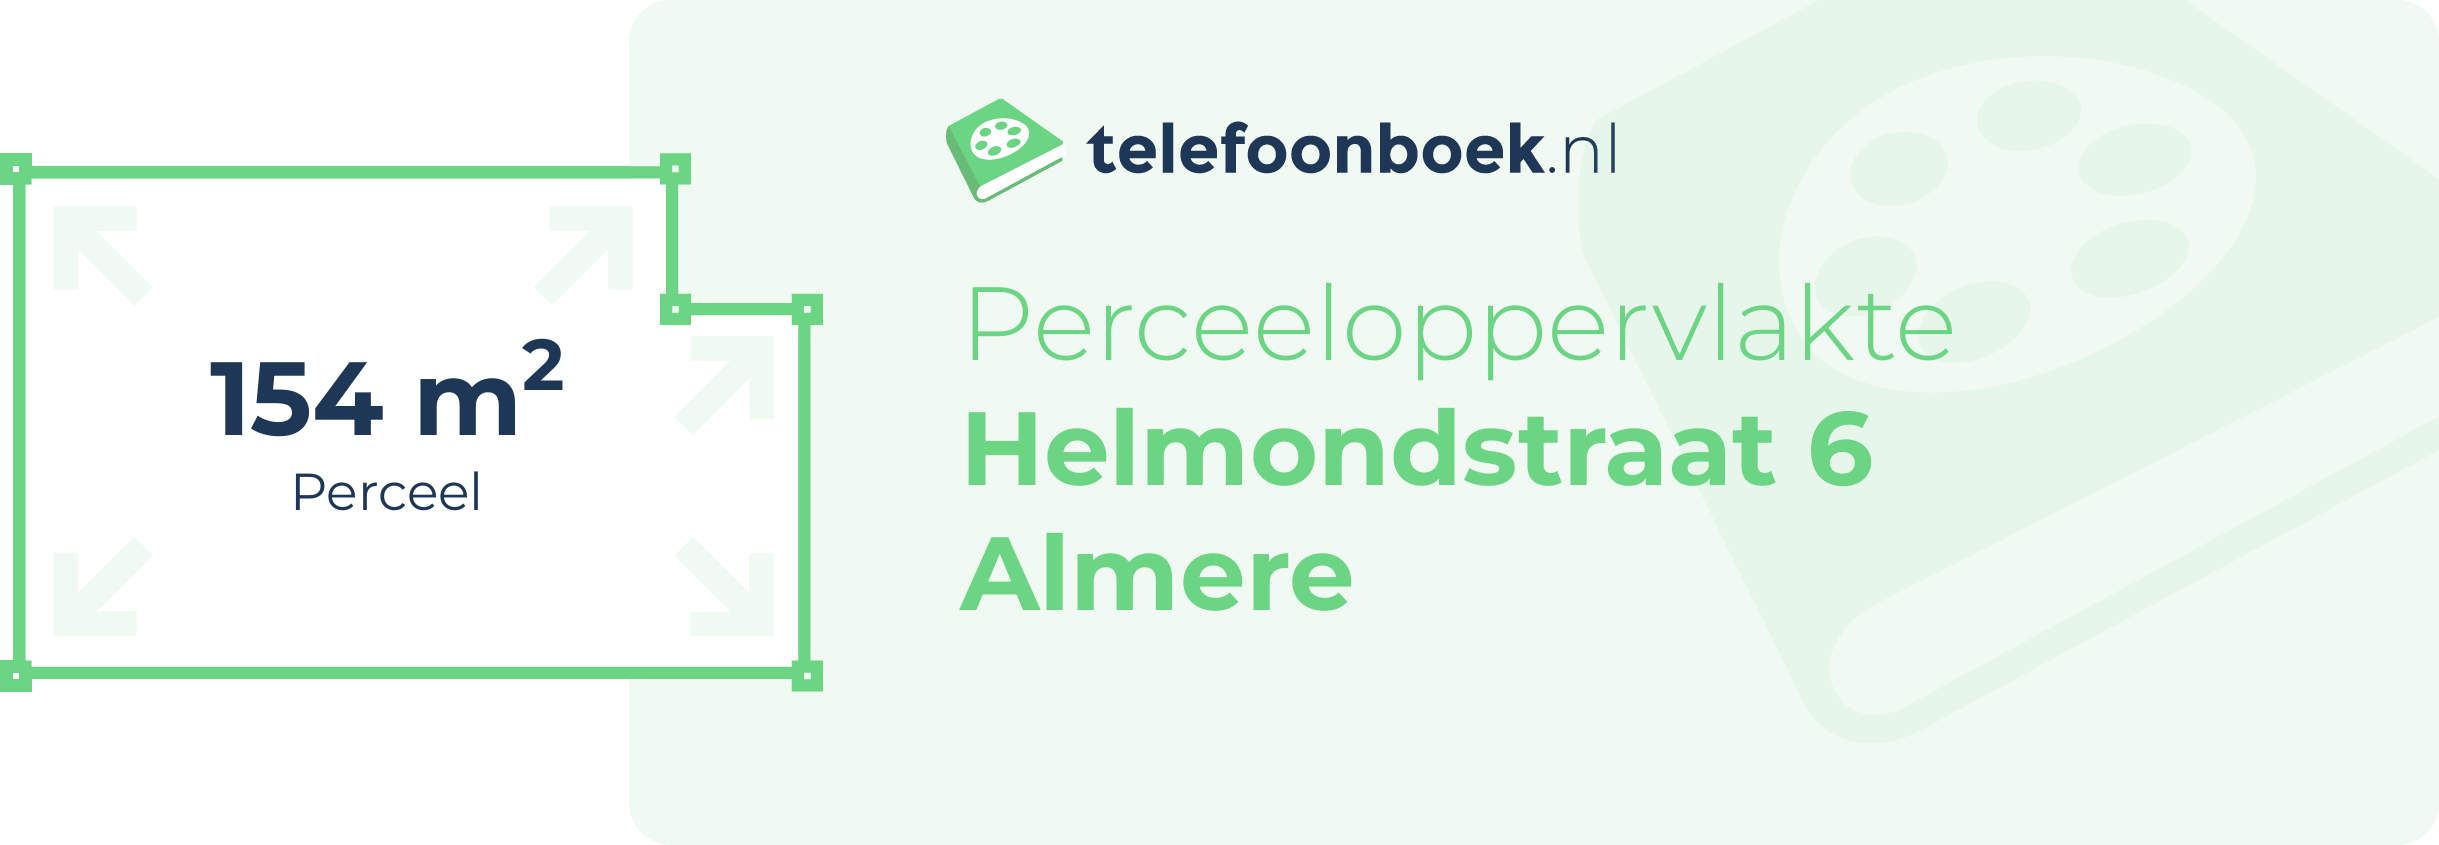 Perceeloppervlakte Helmondstraat 6 Almere